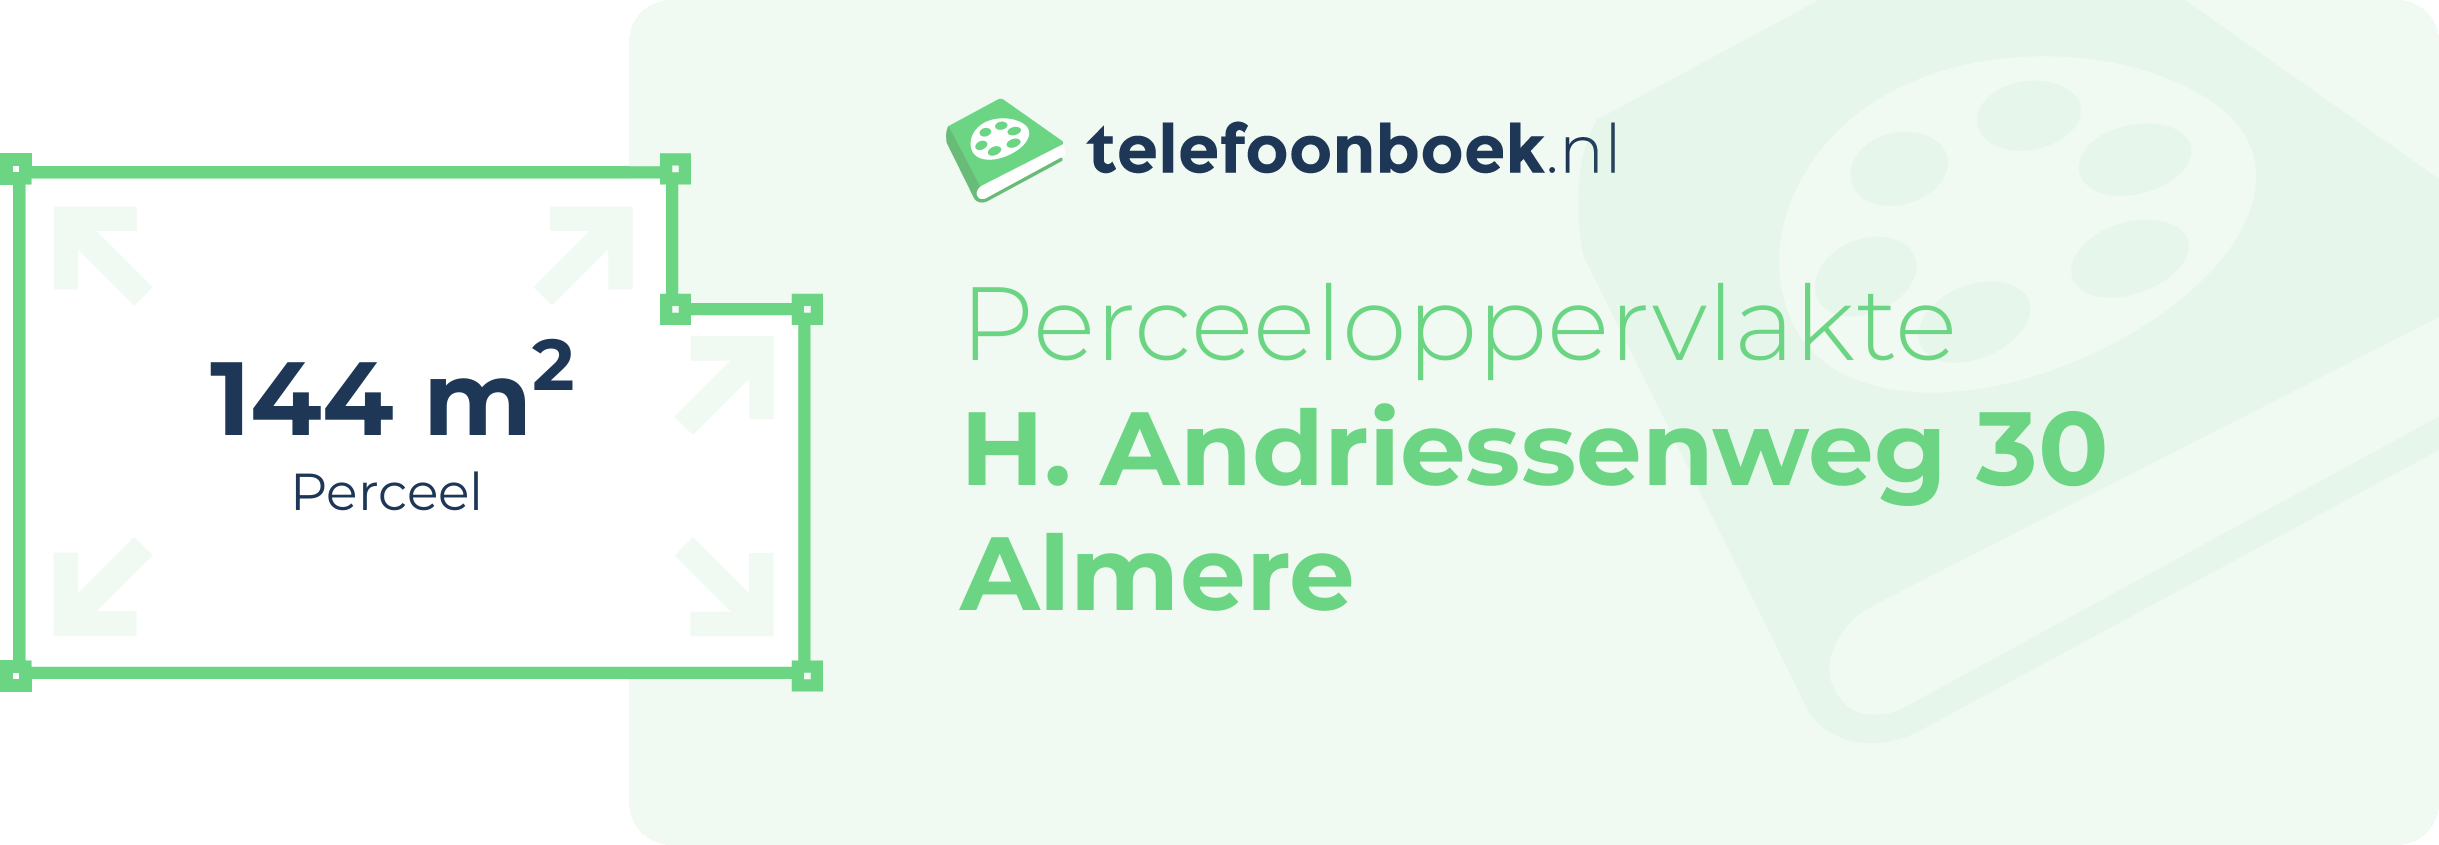 Perceeloppervlakte H. Andriessenweg 30 Almere